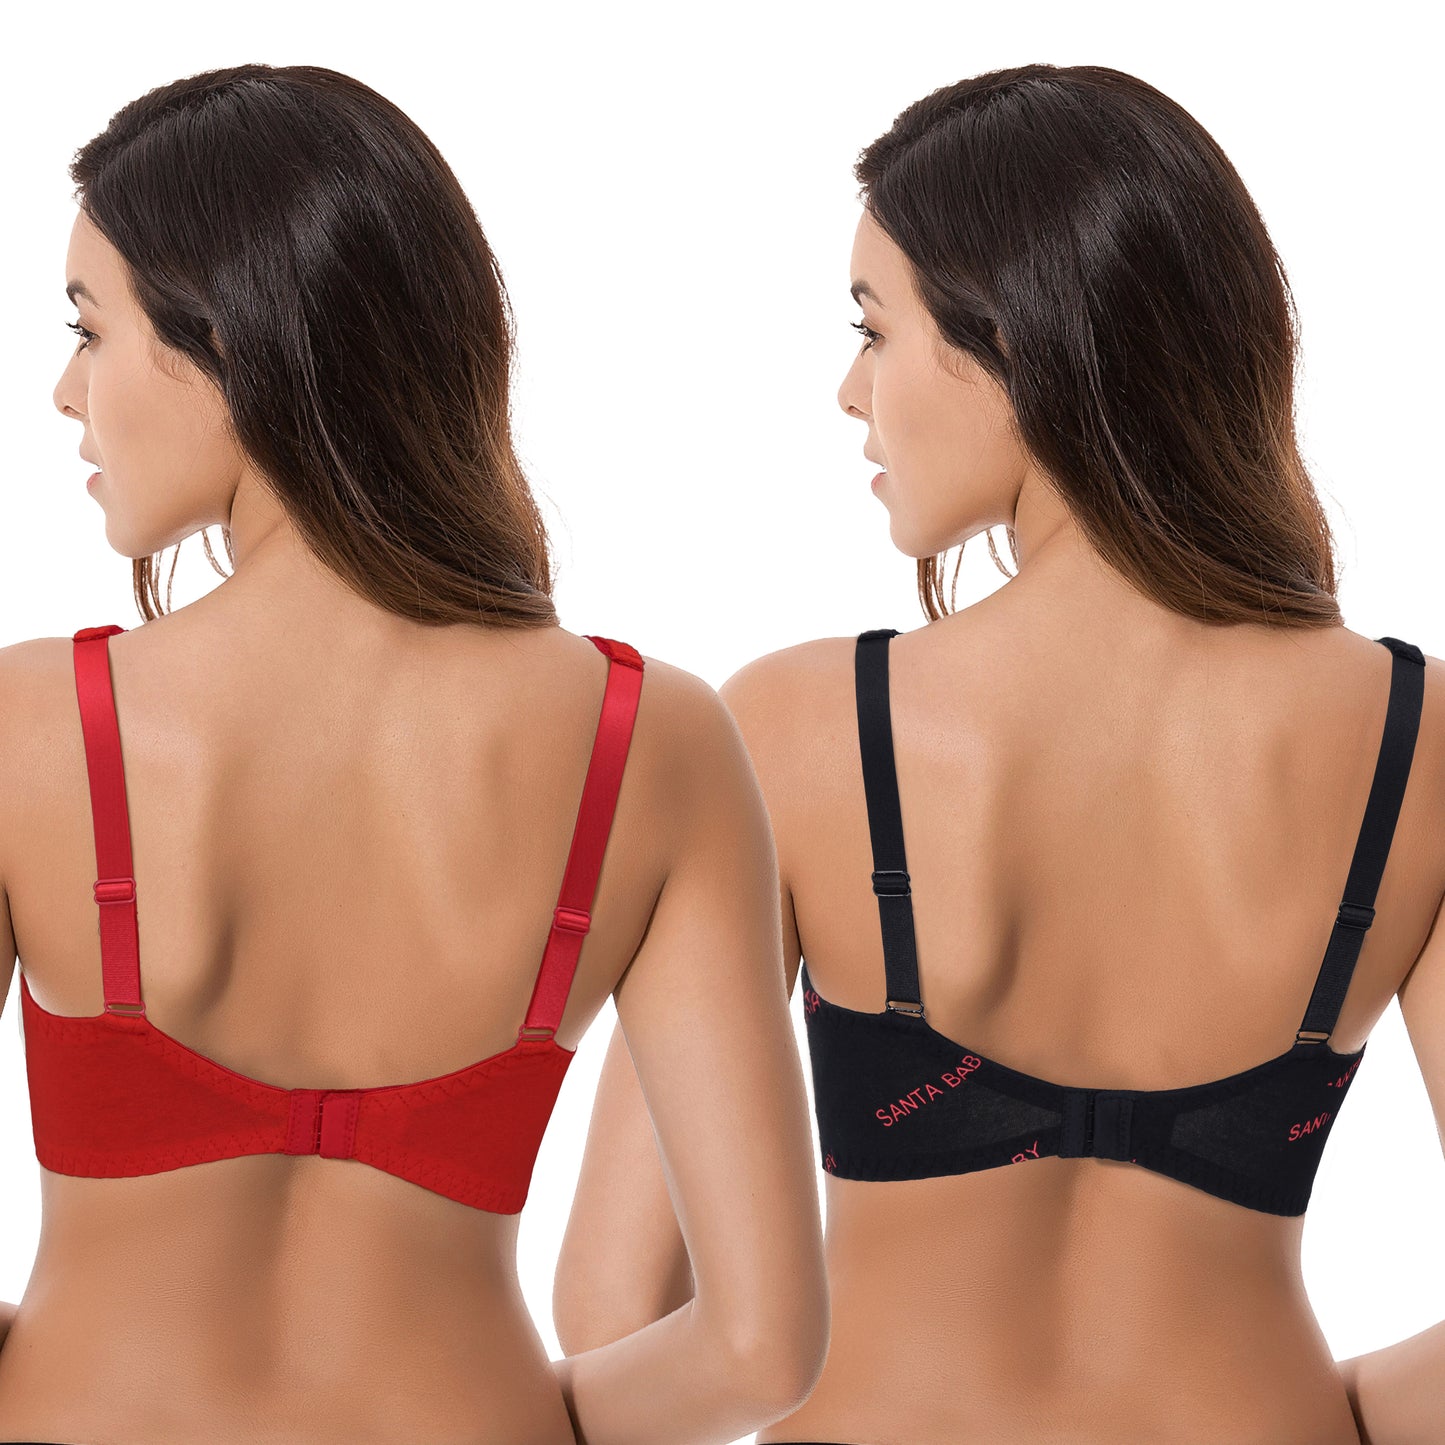 Women's Unlined Plus Size Comfort Cotton Underwire Bra-Black/Red,Red